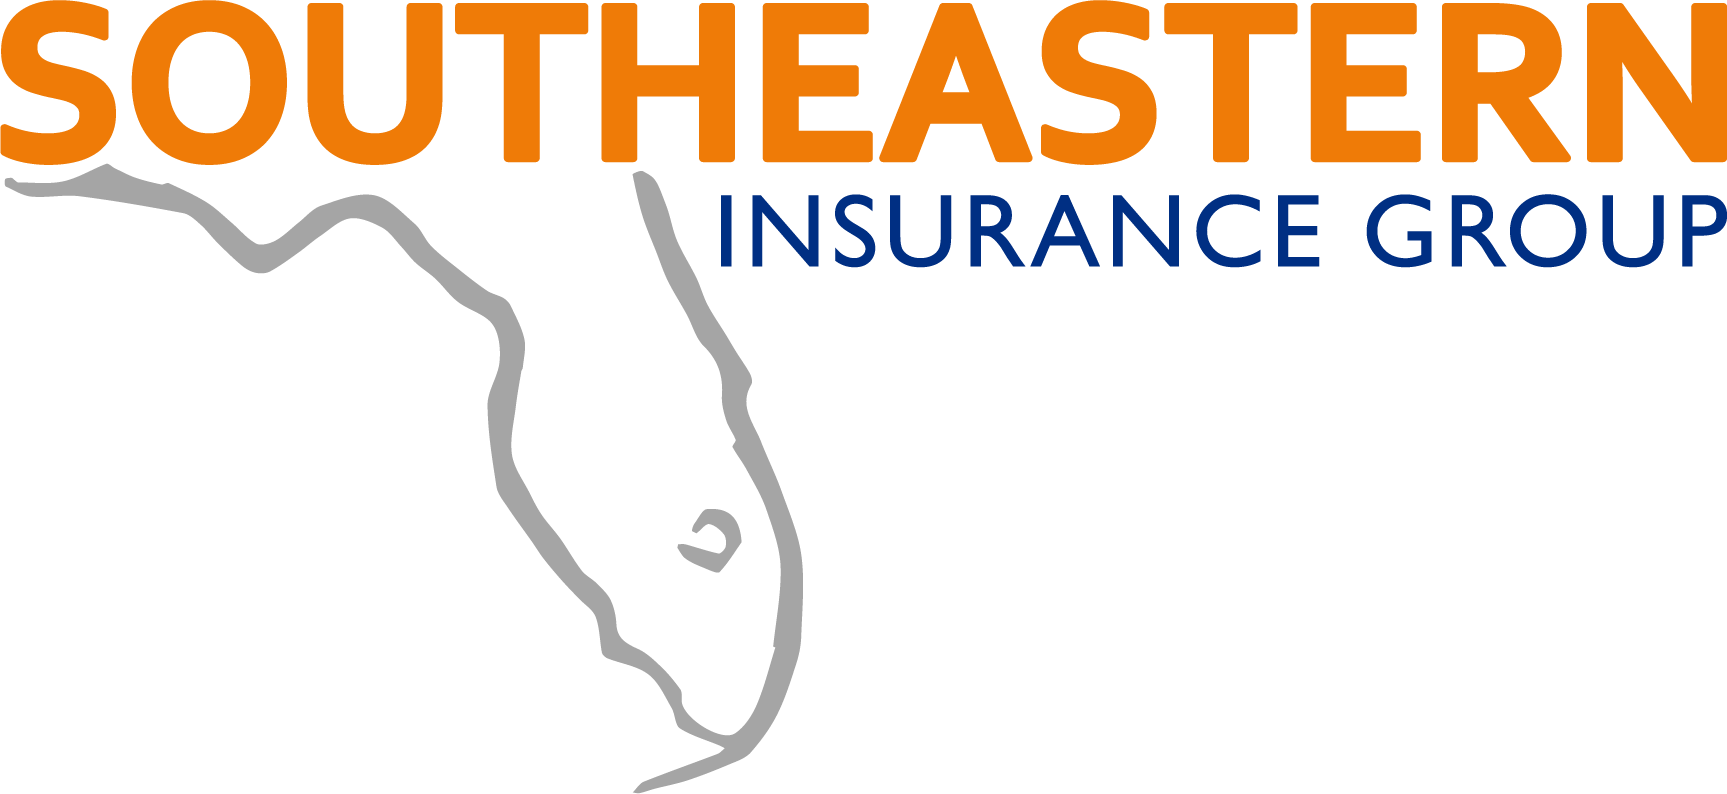 Southeastern Insurance Group logo